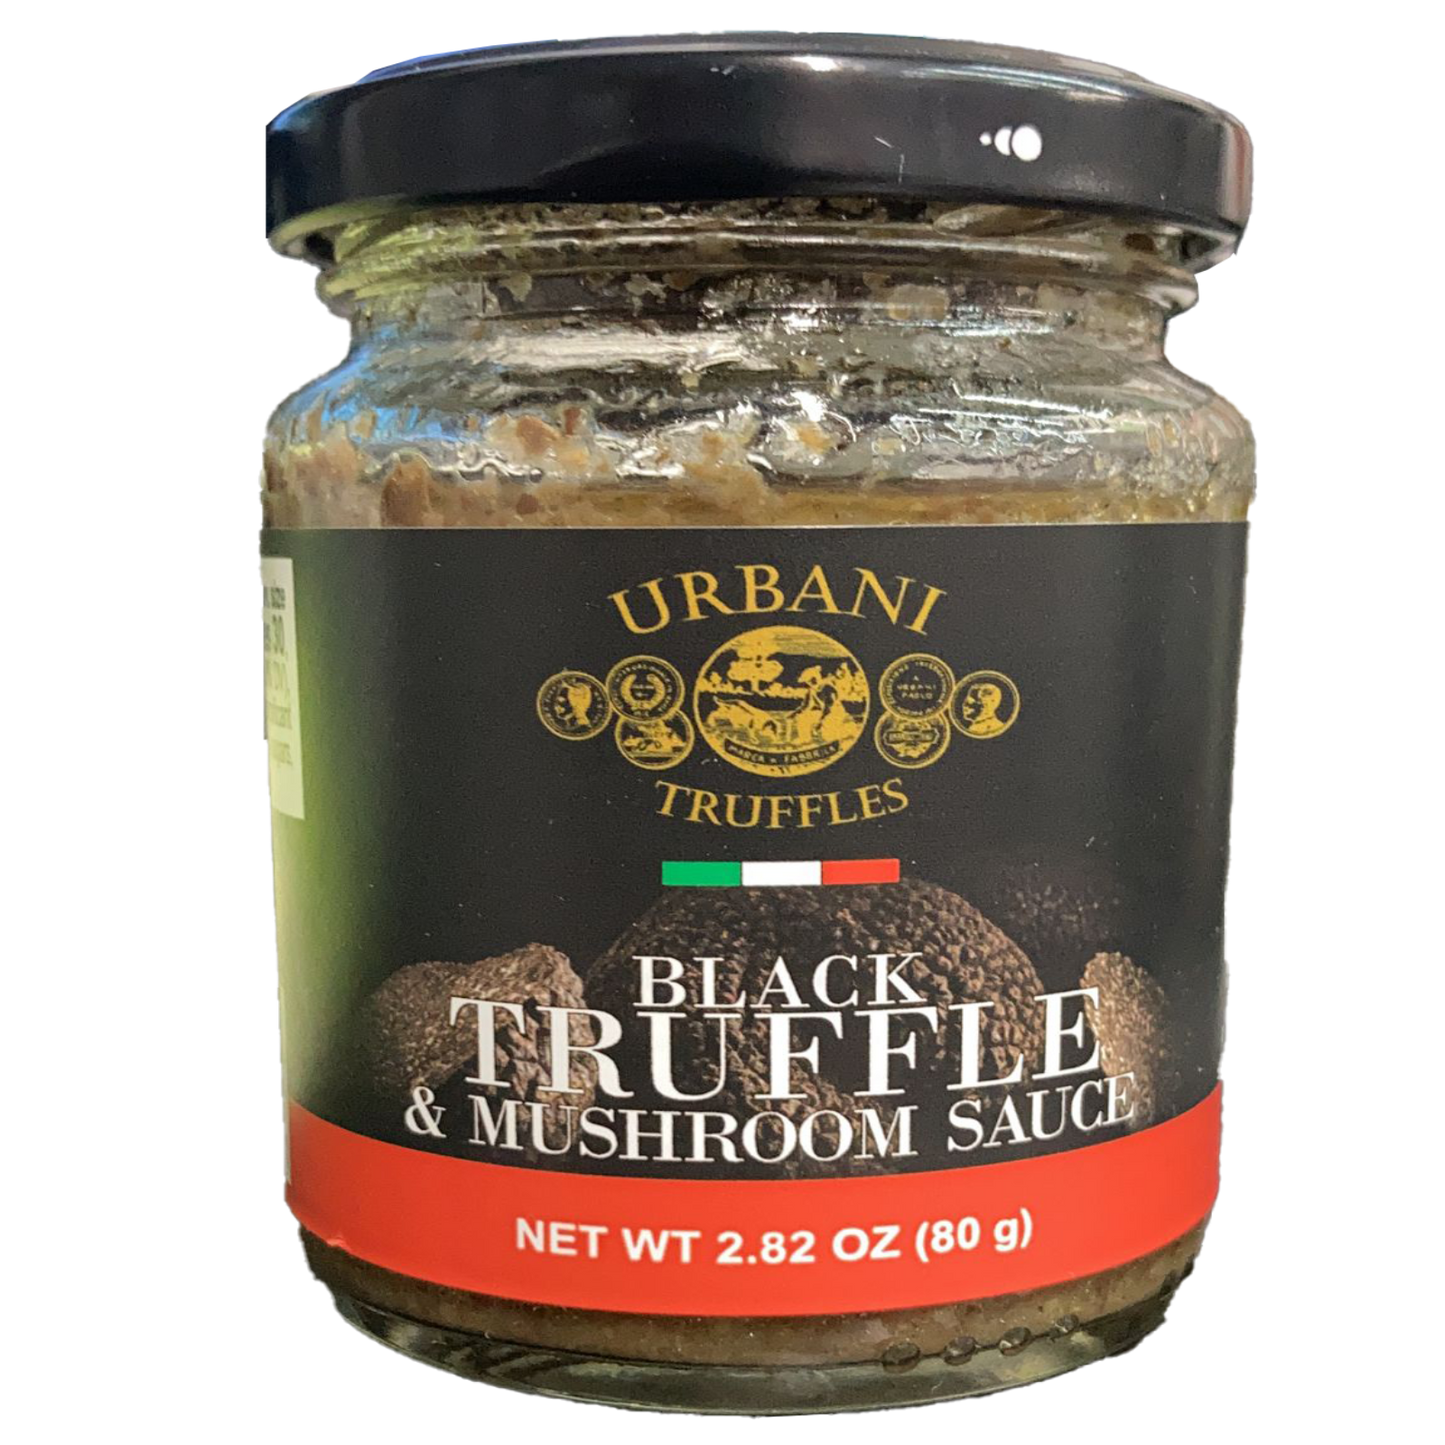 Urbani Truffles Black Truffle & Mushrooms Sauce